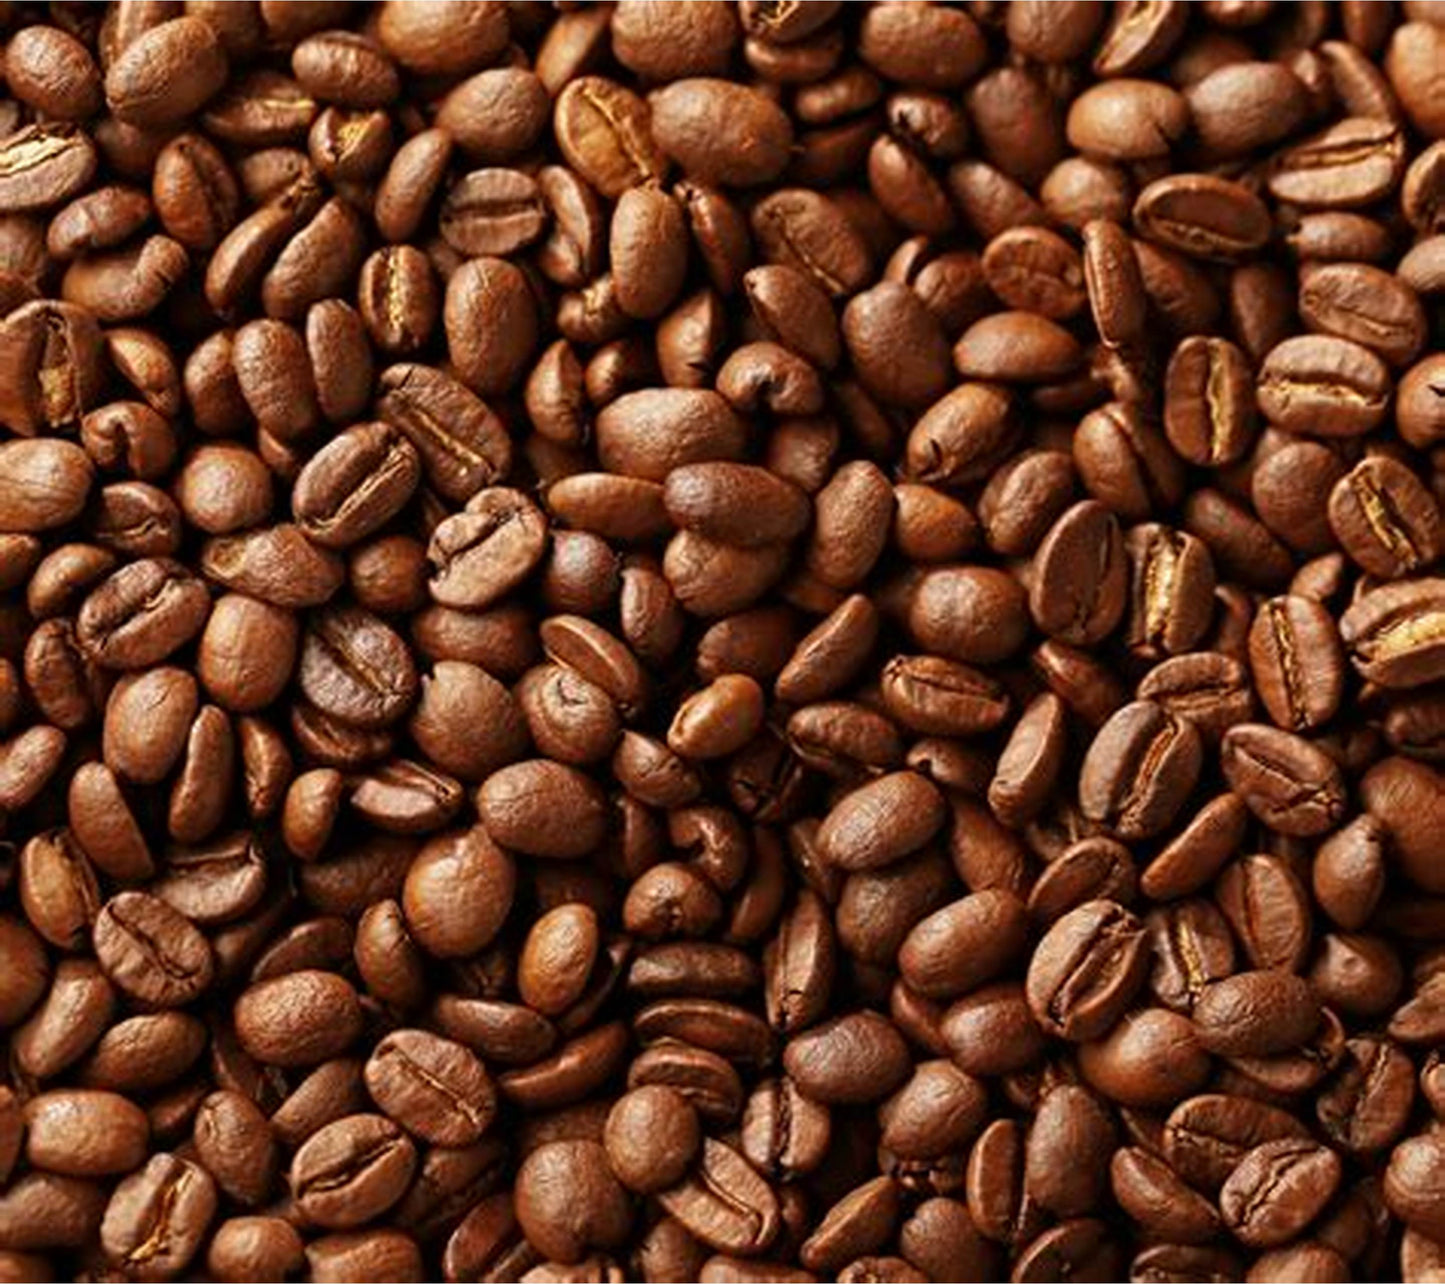 BLUE ADADO, Etiopía, 250 g. (Natural process). High quality speciality coffee